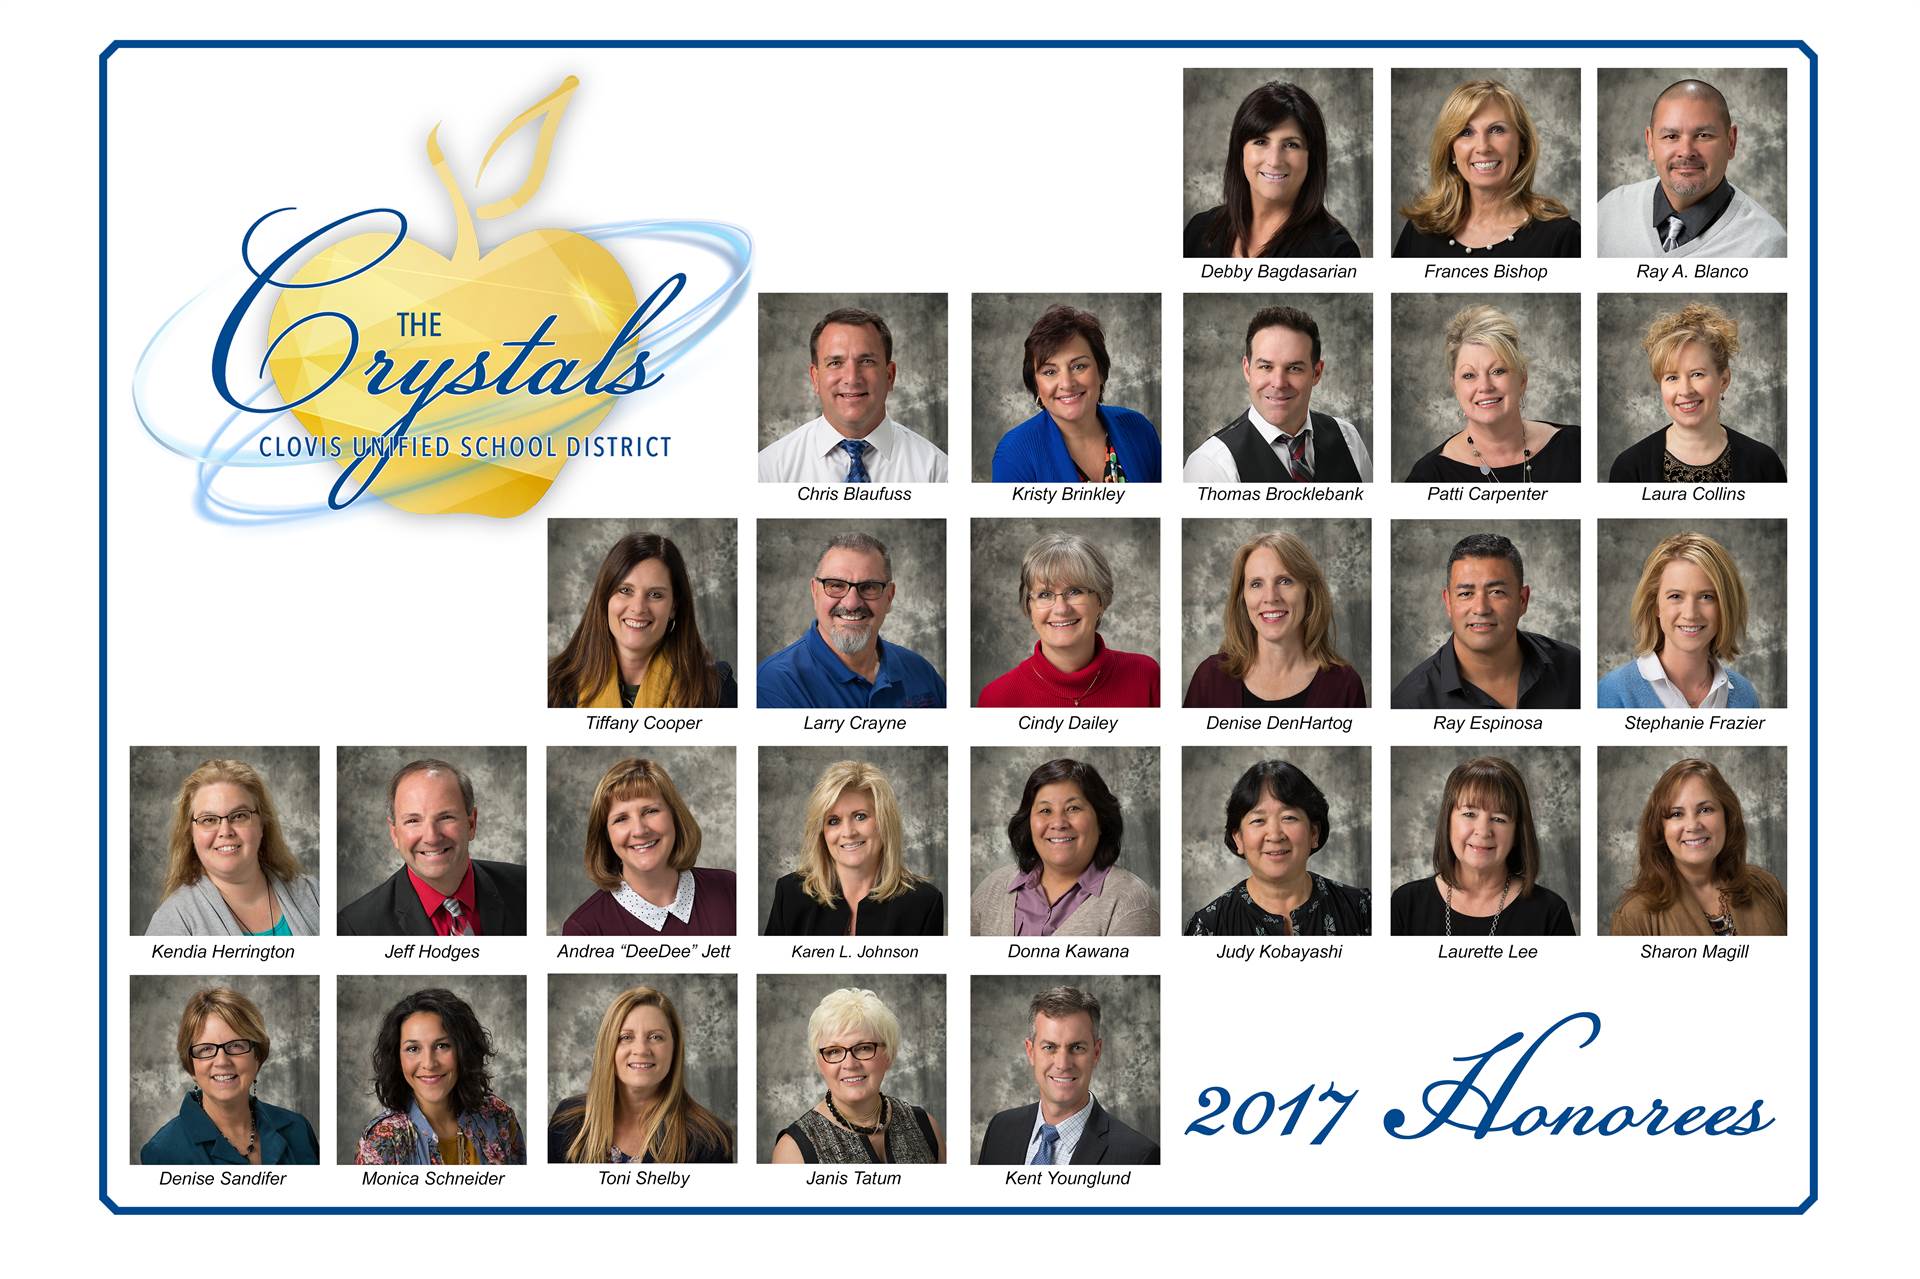 2017 Honoree Photos